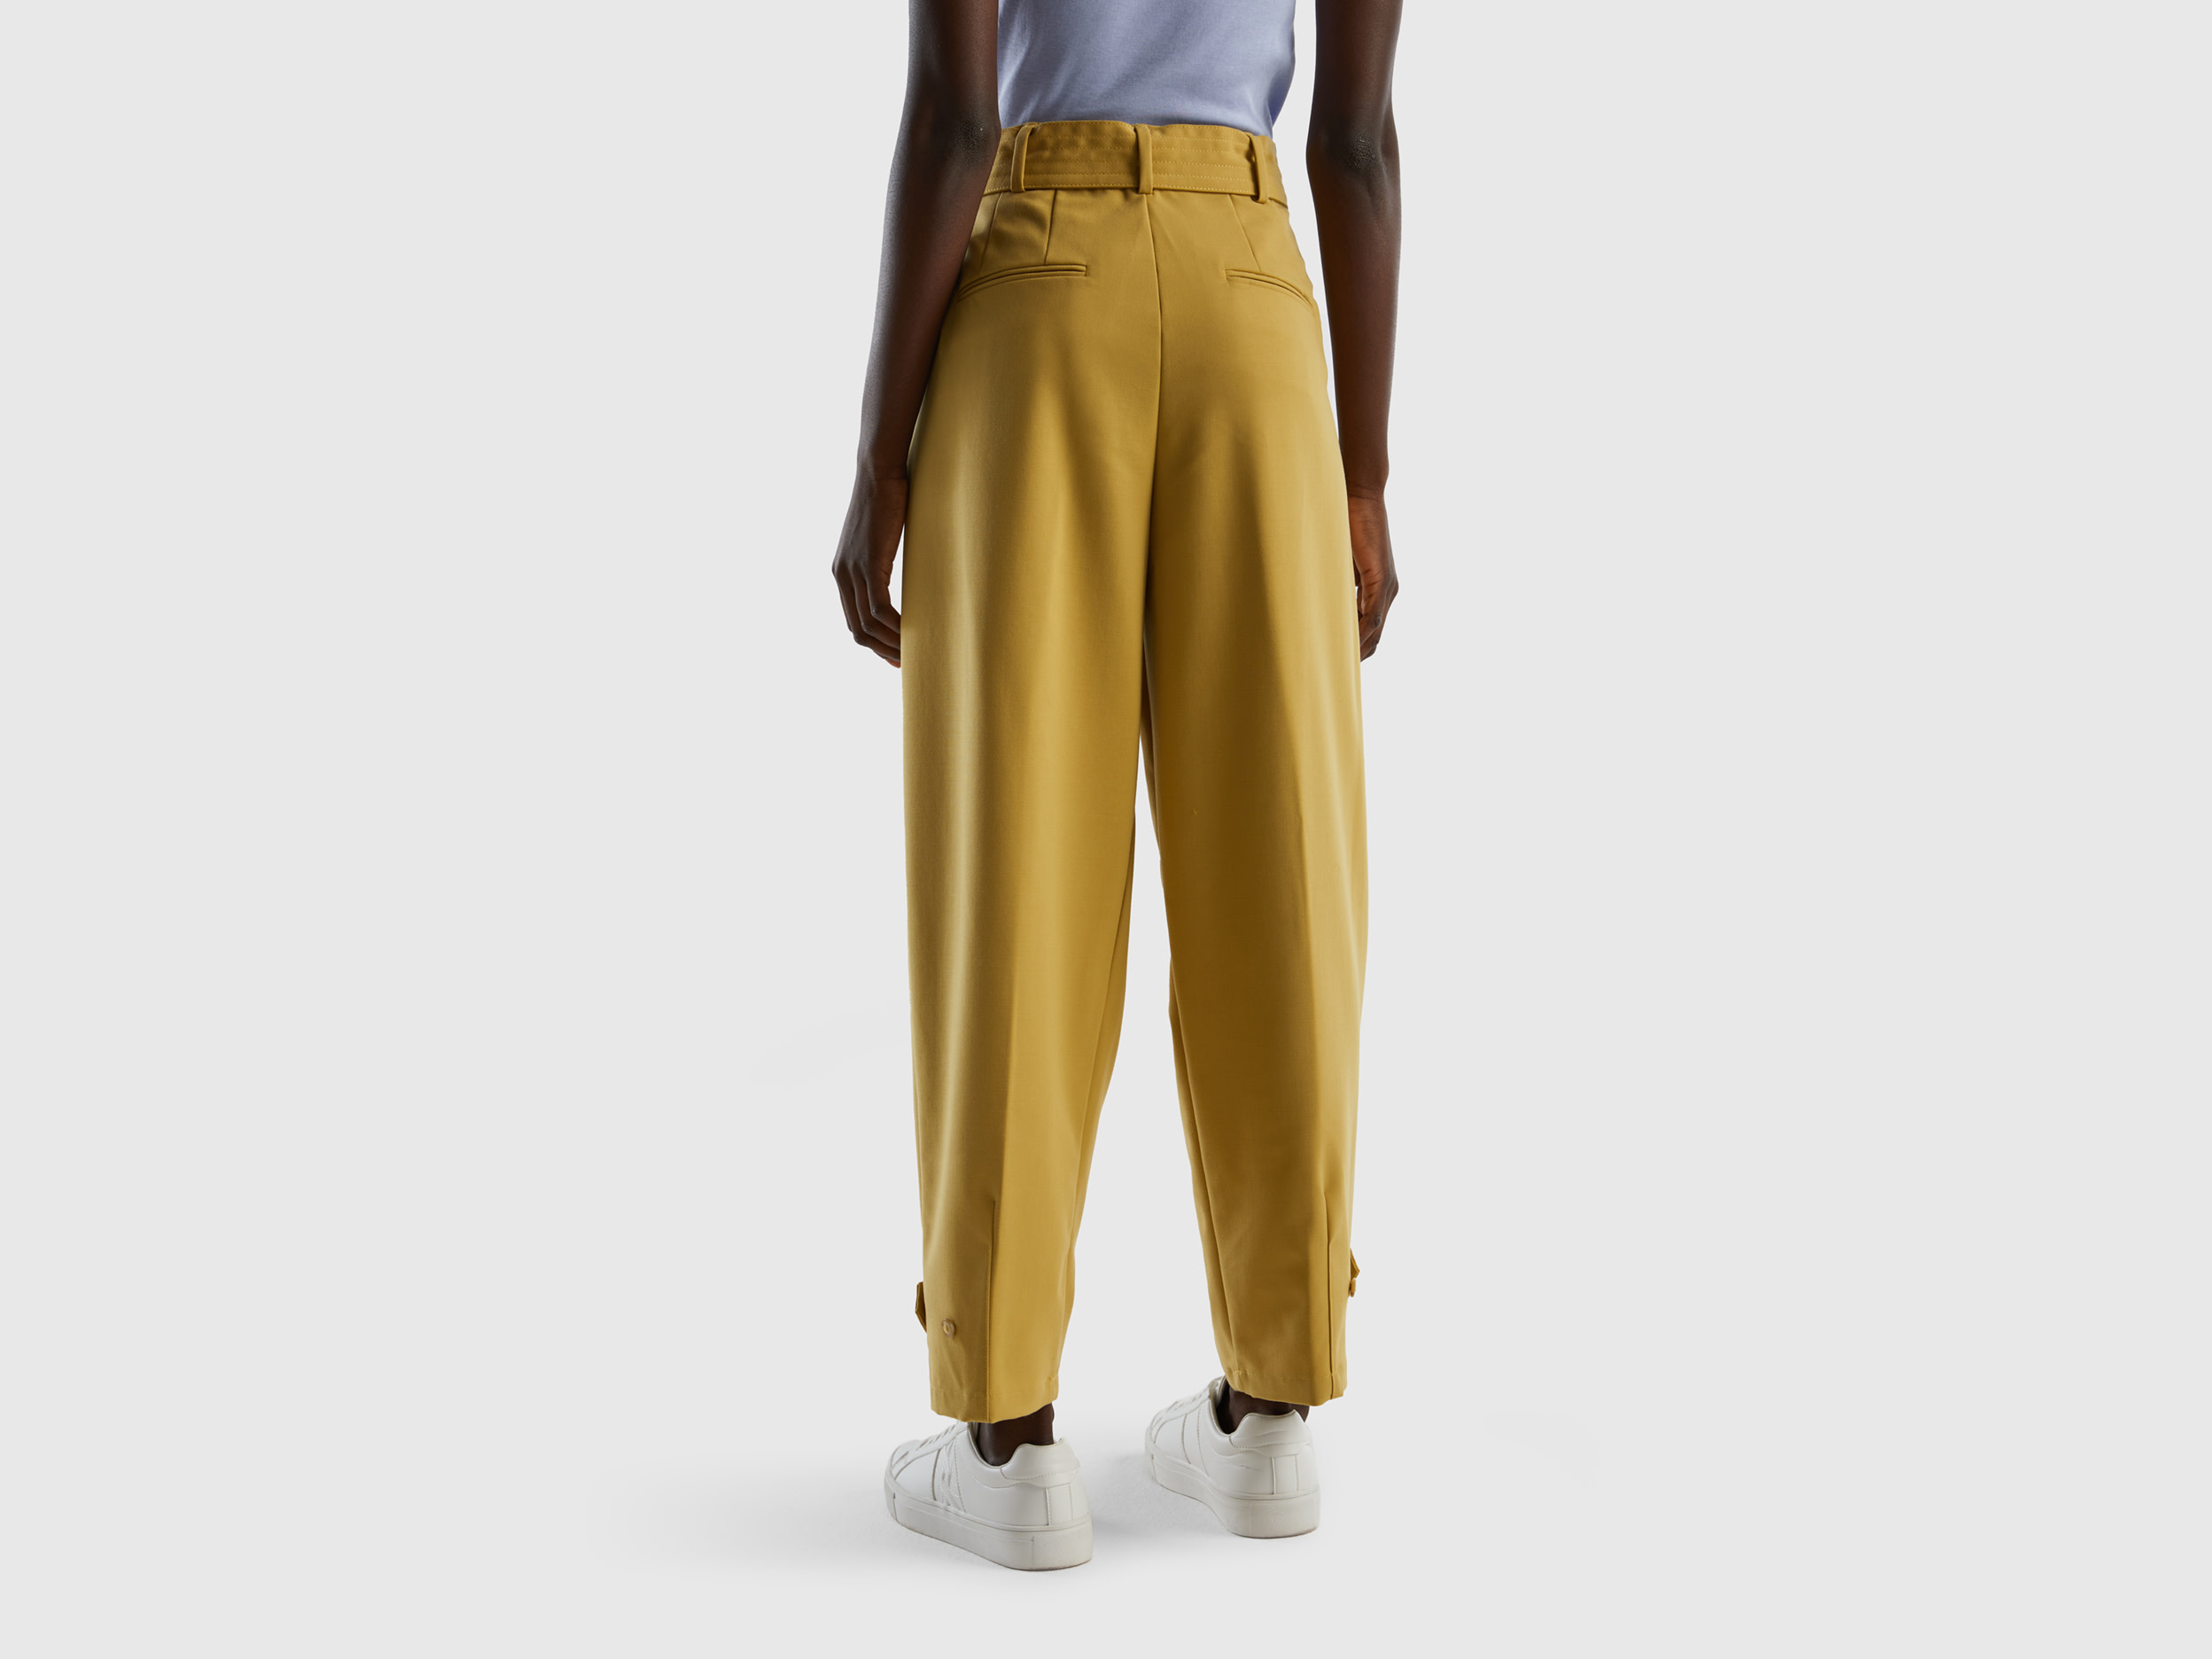 benetton, high-waisted trousers with belt, taglia 6, mustard, women